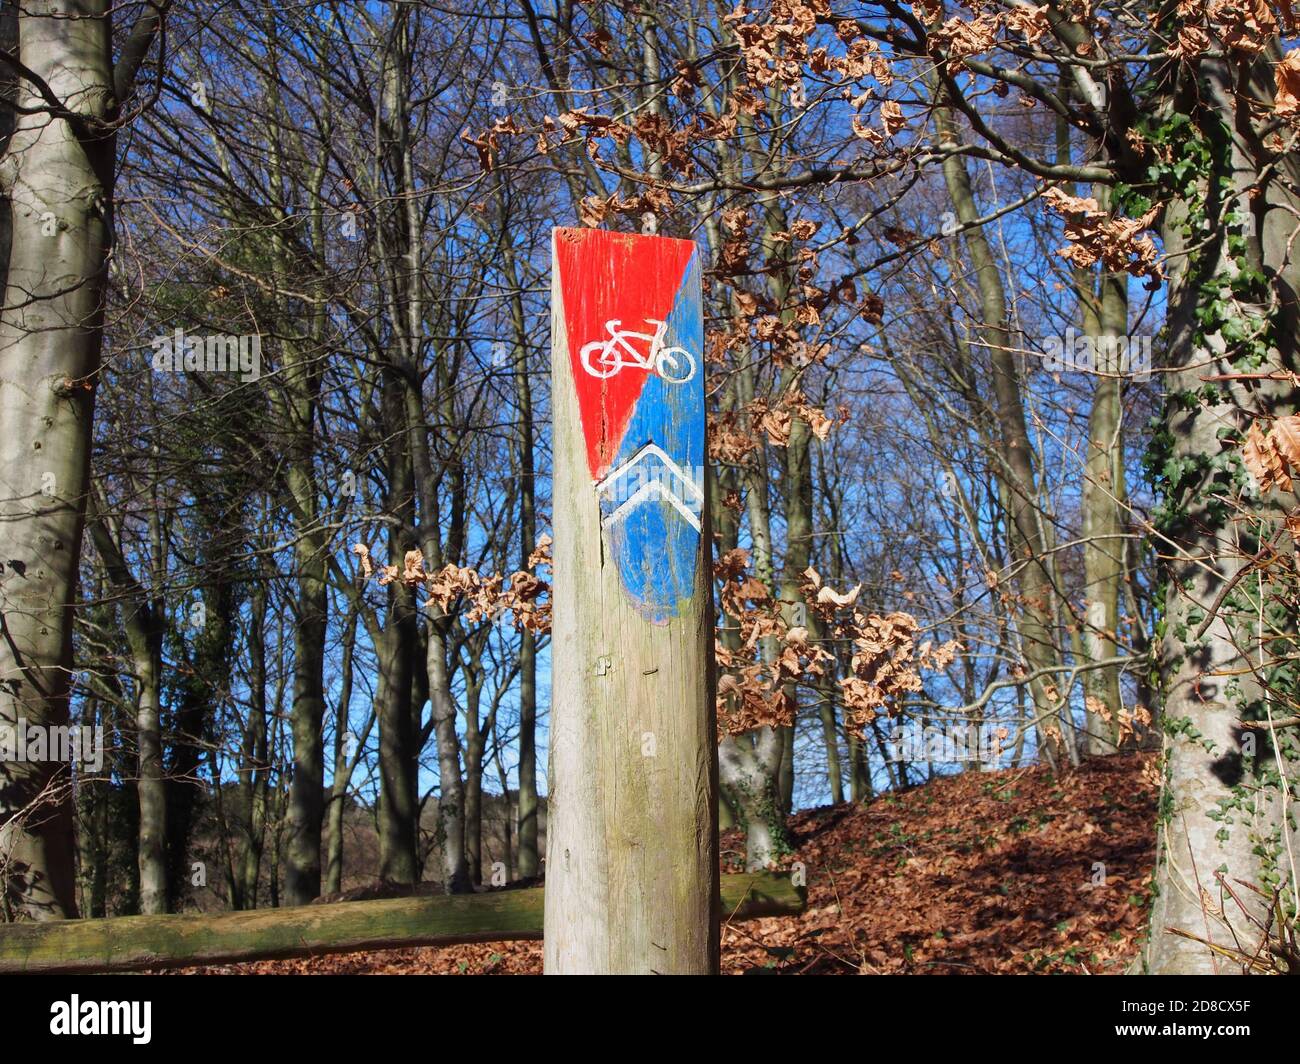 Un cartel que muestra la ruta de una bicicleta de montaña ruta de ciclismo Foto de stock